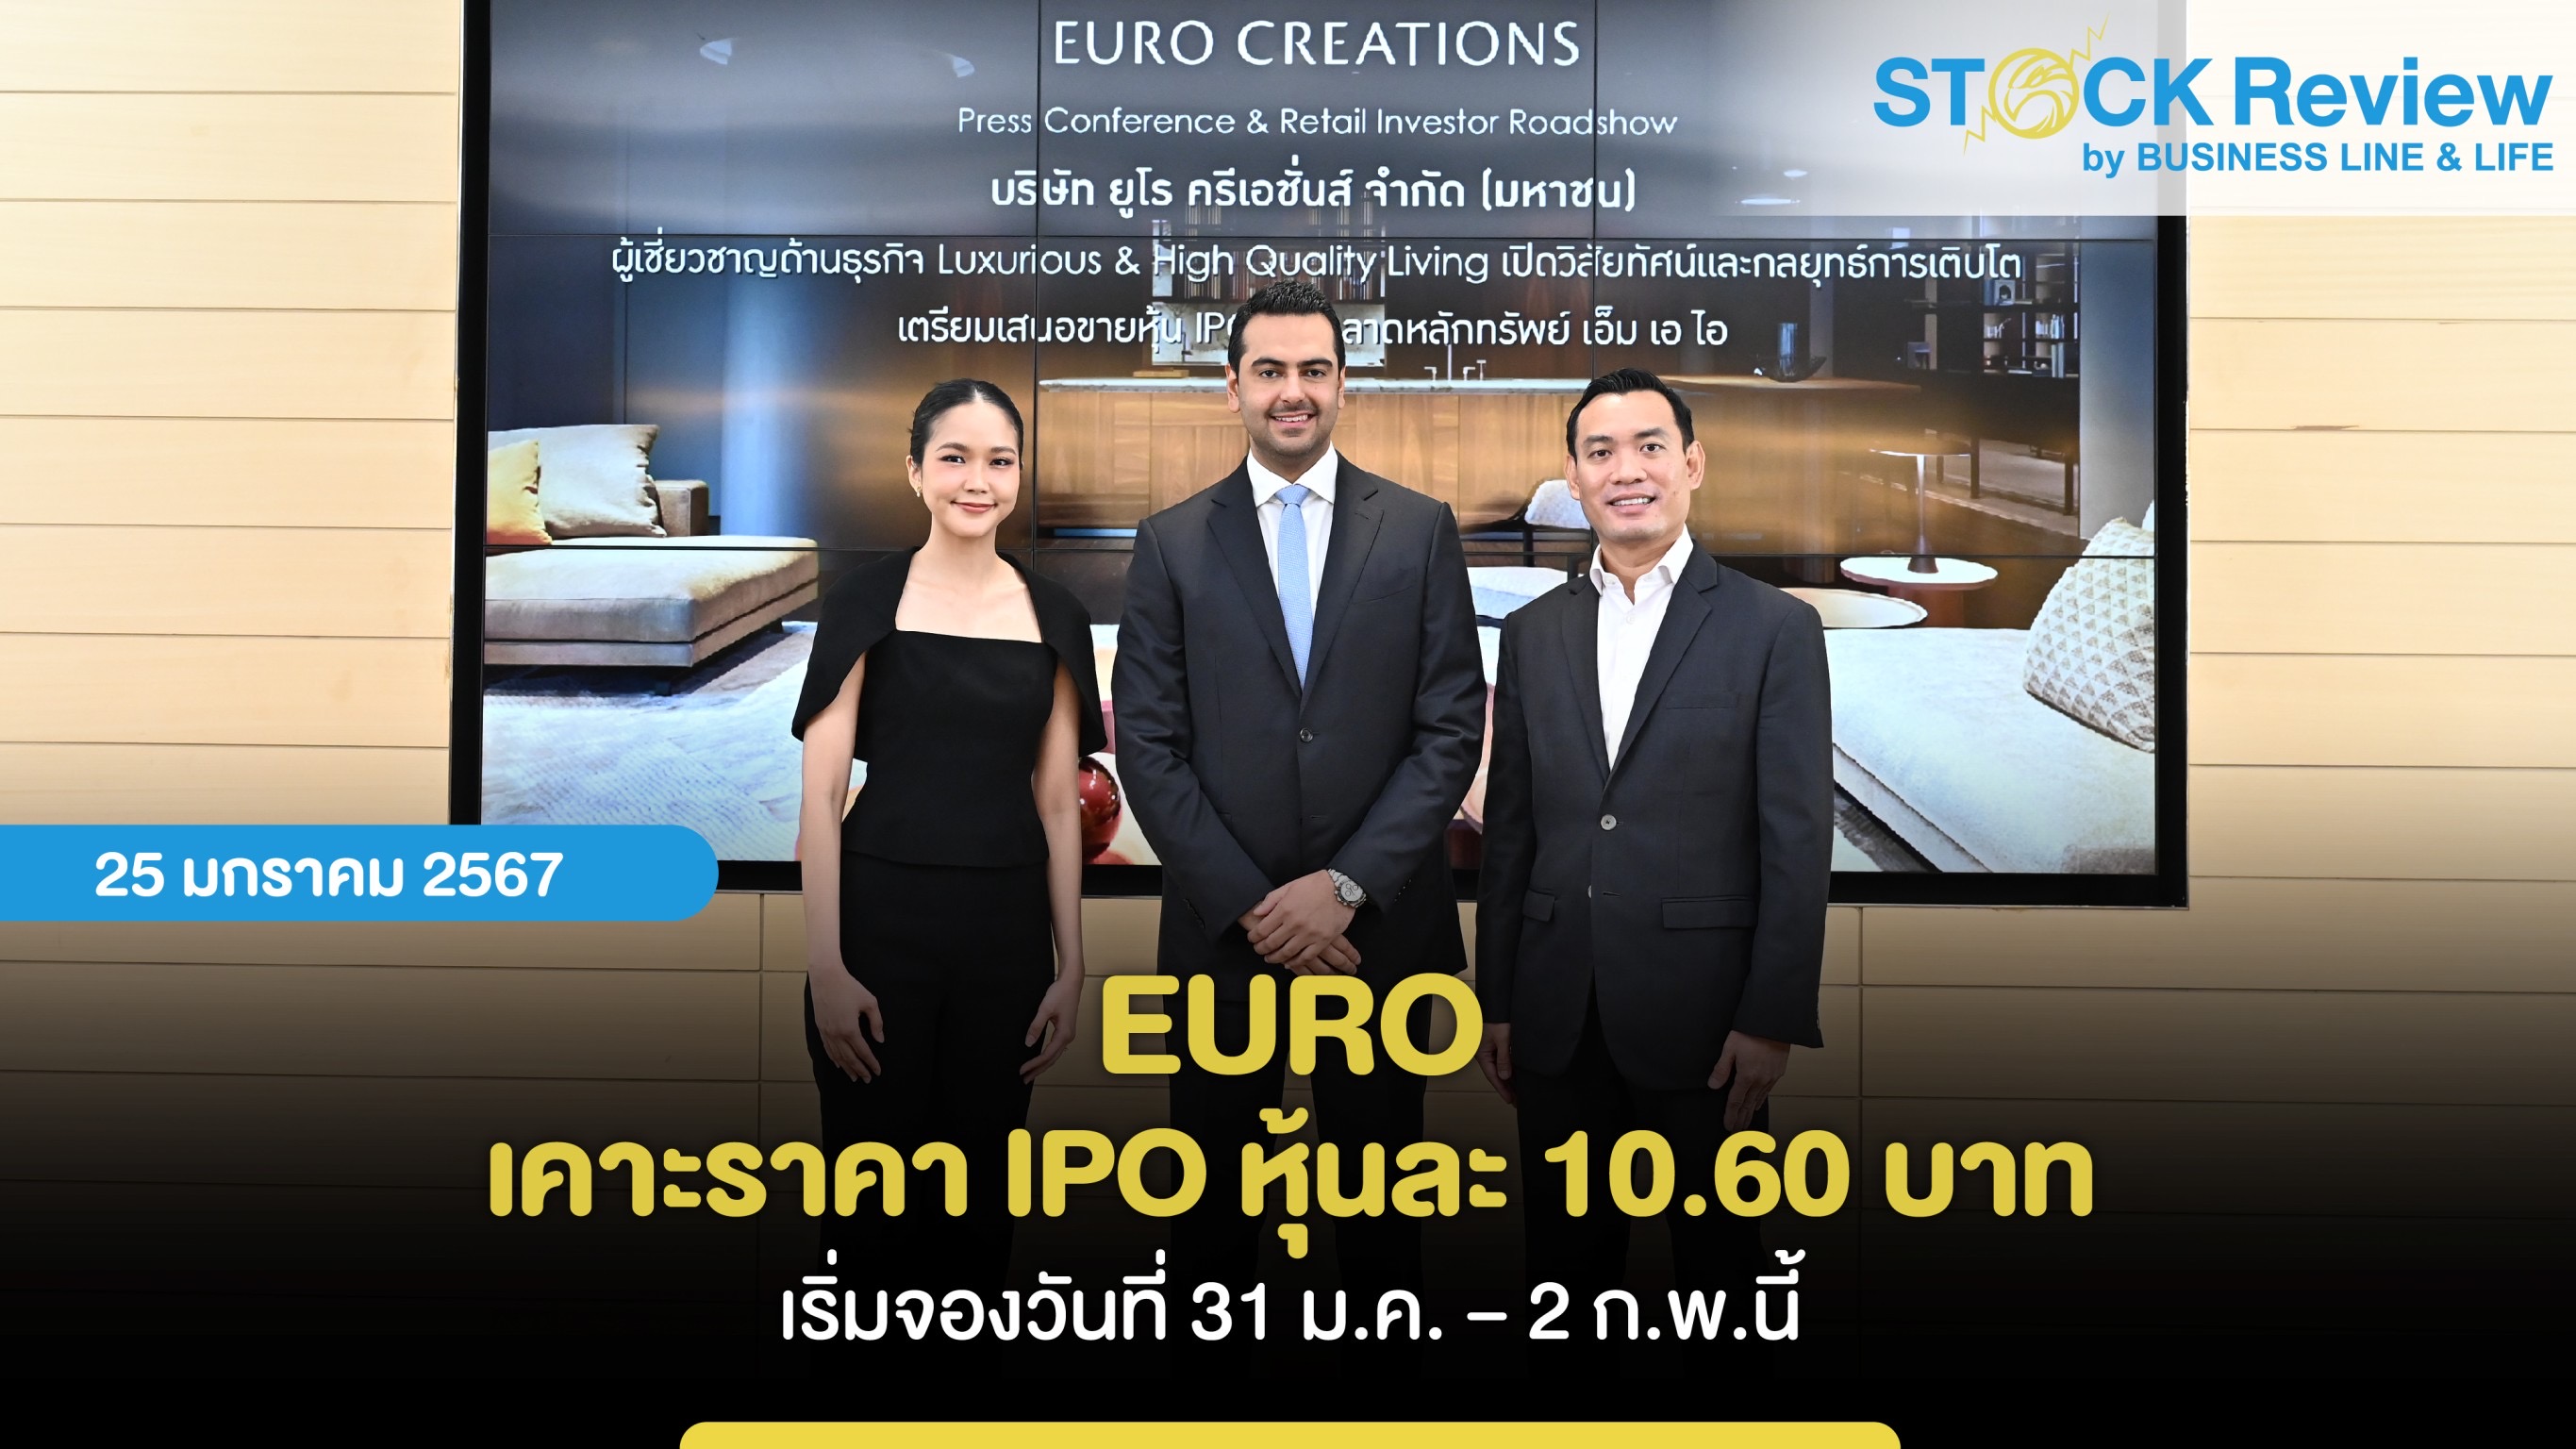 EURO เคาะราคา IPO หุ้นละ 10.60 บาท เริ่มจองวันที่ 31 ม.ค. – 2 ก.พ.นี้ พร้อมขับเคลื่อนธุรกิจ Luxurious & High Quality Living เติบโต